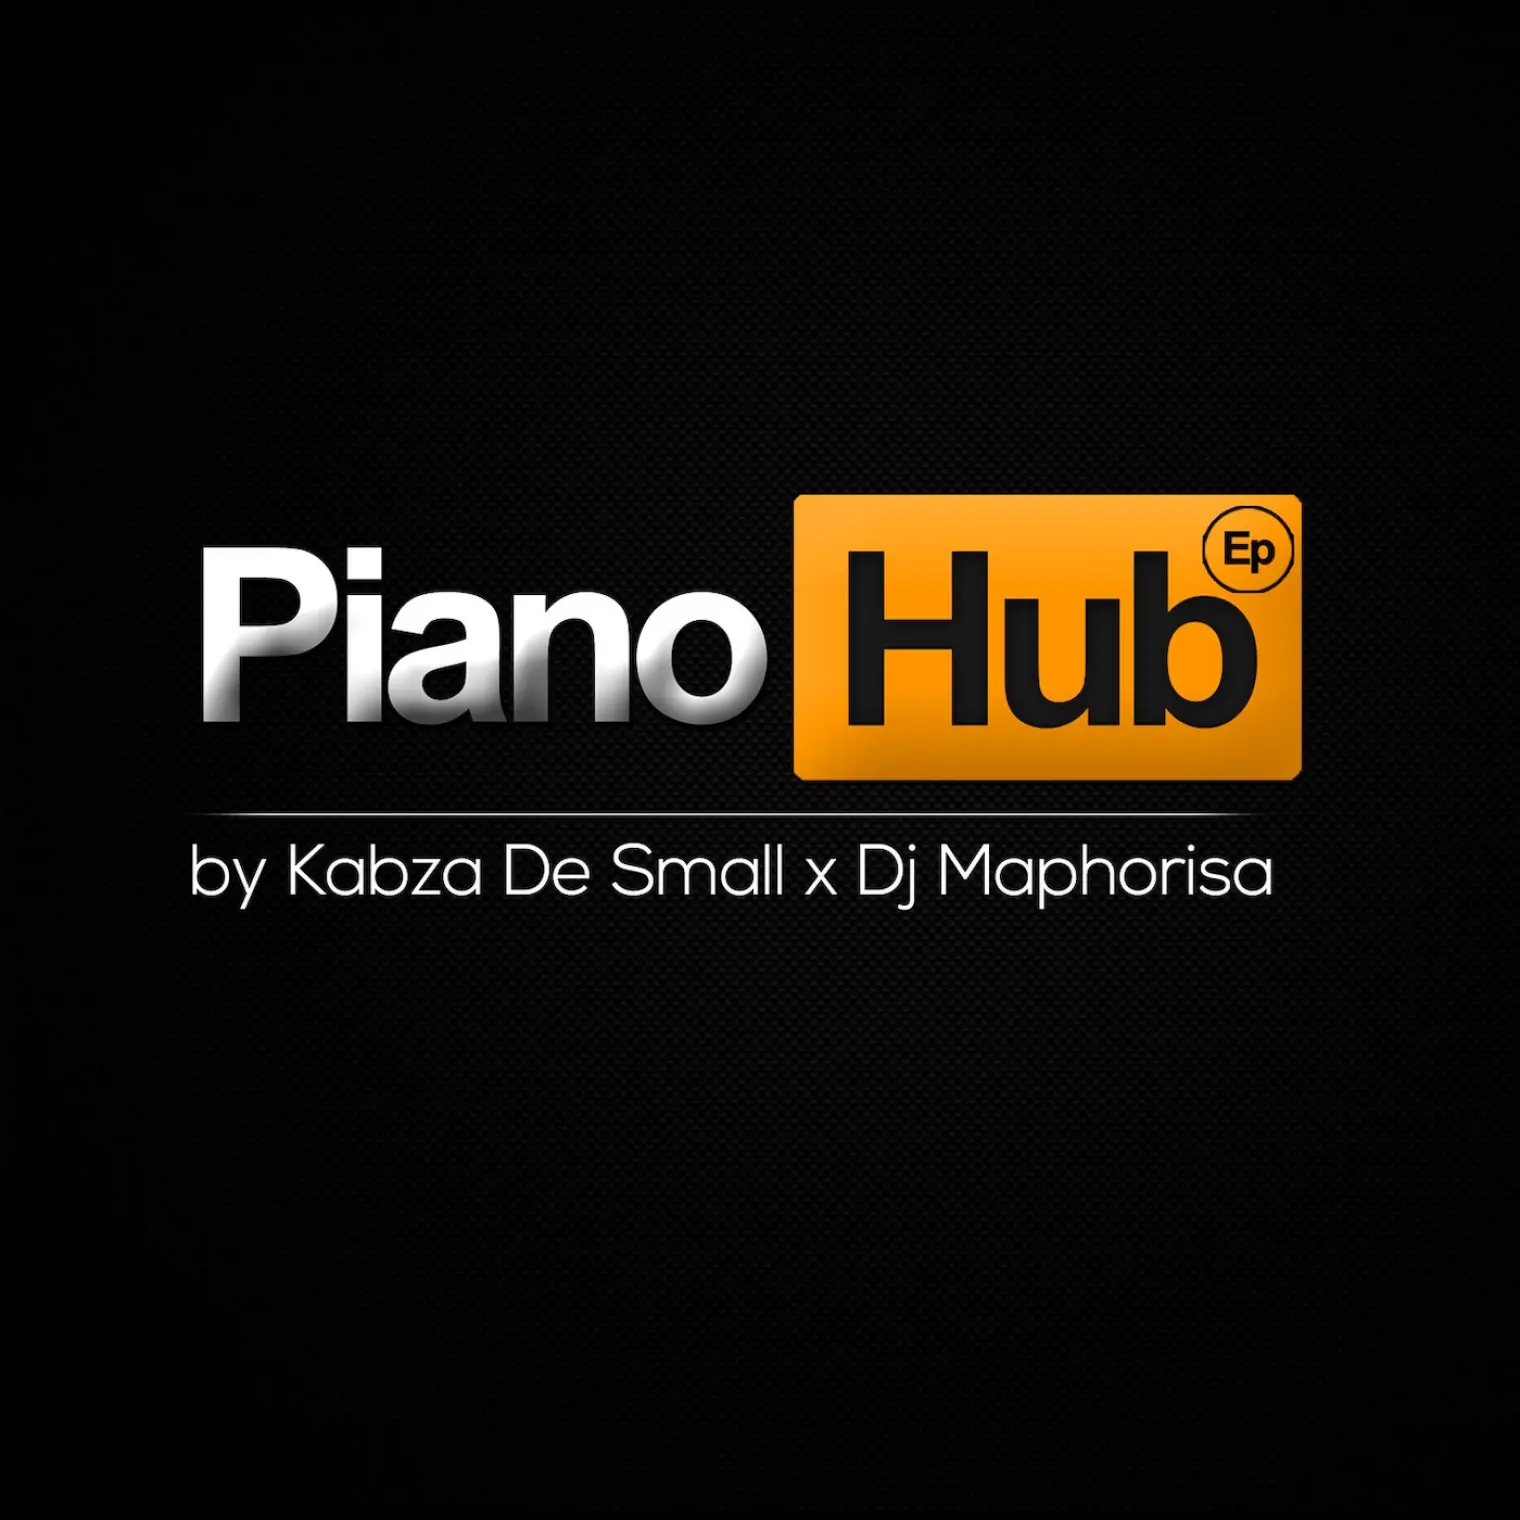 Piano Hub Ep -  Kabza De Small And DJ Maphorisa Feat Lihle Bliss 